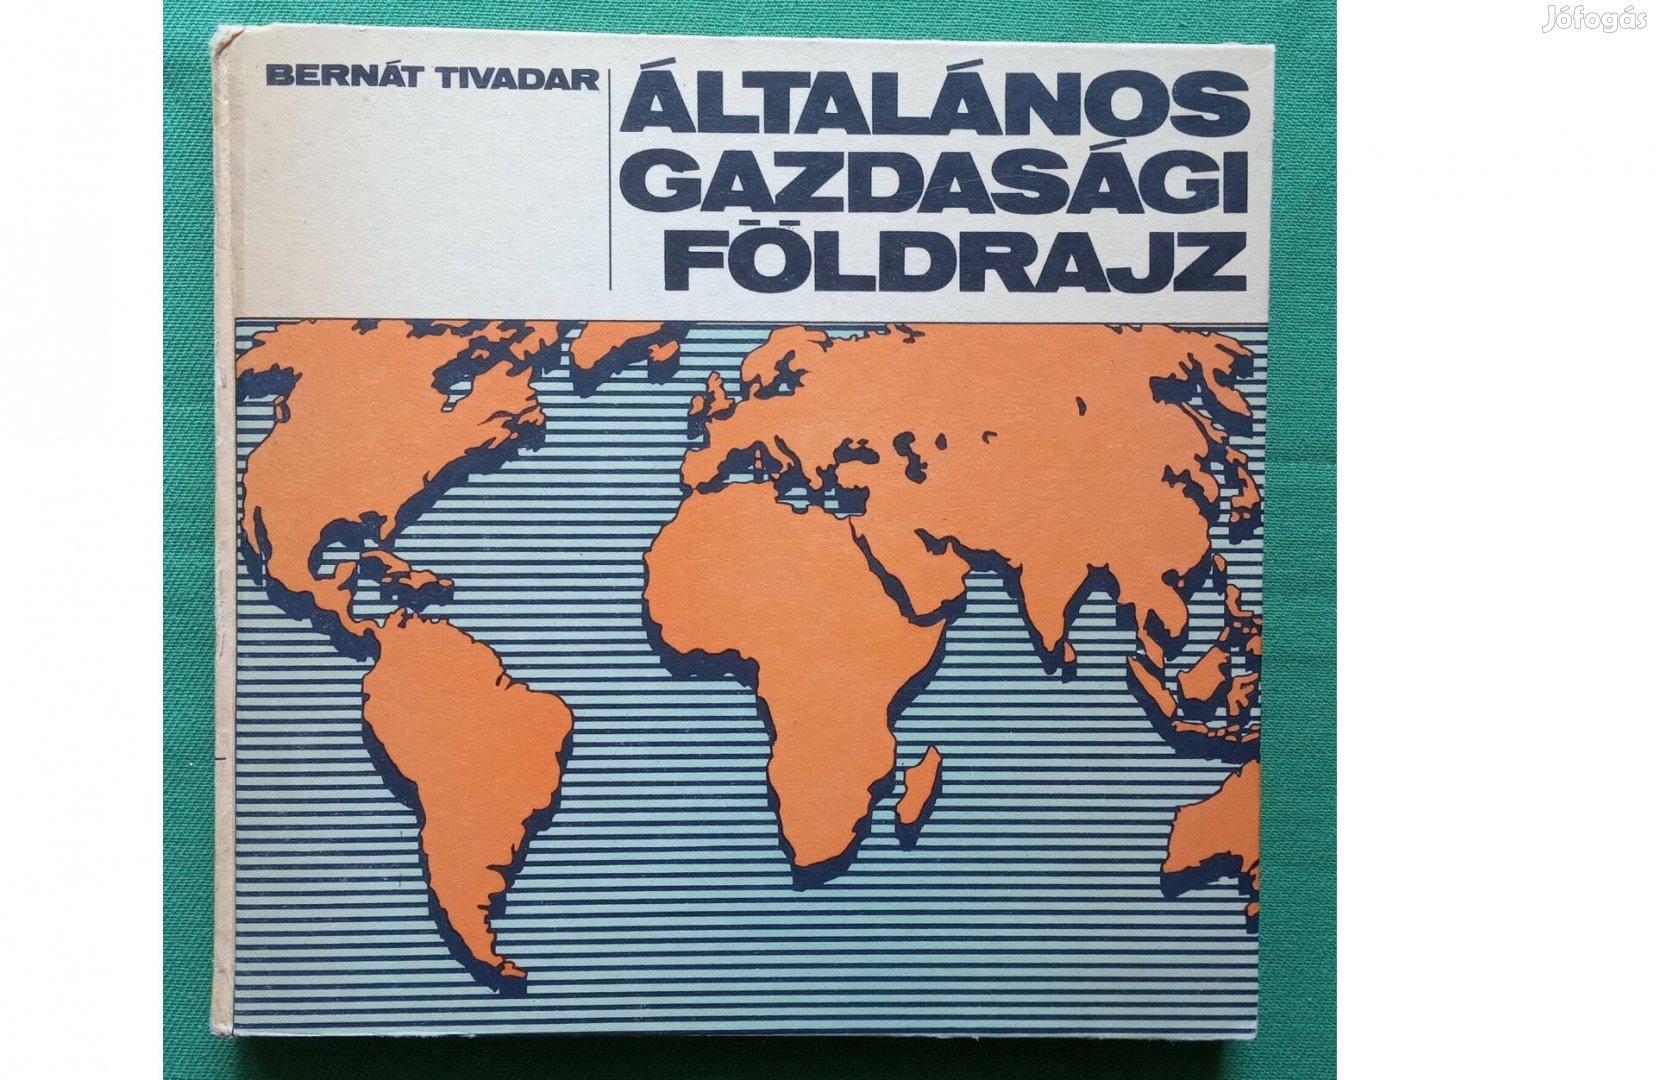 Bernát Tivadar: Általános gazdasági földrajz (1978)